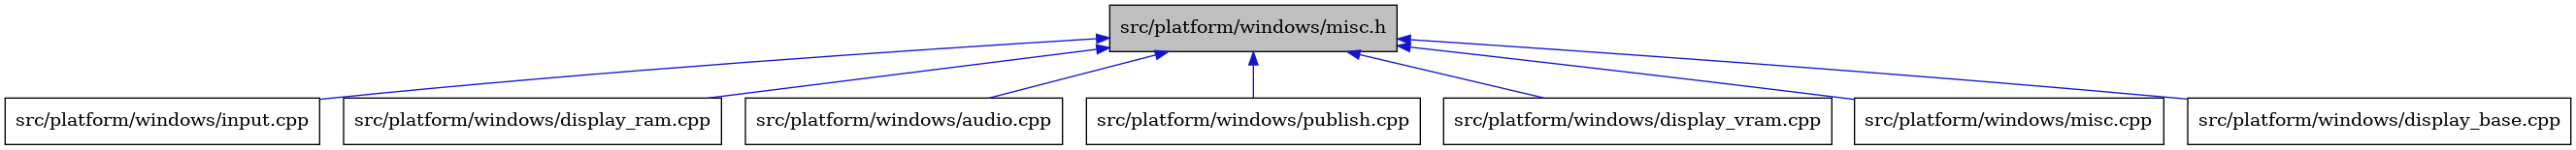 digraph {
    graph [bgcolor="#00000000"]
    node [shape=rectangle style=filled fillcolor="#FFFFFF" font=Helvetica padding=2]
    edge [color="#1414CE"]
    "5" [label="src/platform/windows/input.cpp" tooltip="src/platform/windows/input.cpp"]
    "1" [label="src/platform/windows/misc.h" tooltip="src/platform/windows/misc.h" fillcolor="#BFBFBF"]
    "3" [label="src/platform/windows/display_ram.cpp" tooltip="src/platform/windows/display_ram.cpp"]
    "2" [label="src/platform/windows/audio.cpp" tooltip="src/platform/windows/audio.cpp"]
    "8" [label="src/platform/windows/publish.cpp" tooltip="src/platform/windows/publish.cpp"]
    "6" [label="src/platform/windows/display_vram.cpp" tooltip="src/platform/windows/display_vram.cpp"]
    "7" [label="src/platform/windows/misc.cpp" tooltip="src/platform/windows/misc.cpp"]
    "4" [label="src/platform/windows/display_base.cpp" tooltip="src/platform/windows/display_base.cpp"]
    "1" -> "2" [dir=back tooltip="include"]
    "1" -> "3" [dir=back tooltip="include"]
    "1" -> "4" [dir=back tooltip="include"]
    "1" -> "5" [dir=back tooltip="include"]
    "1" -> "6" [dir=back tooltip="include"]
    "1" -> "7" [dir=back tooltip="include"]
    "1" -> "8" [dir=back tooltip="include"]
}